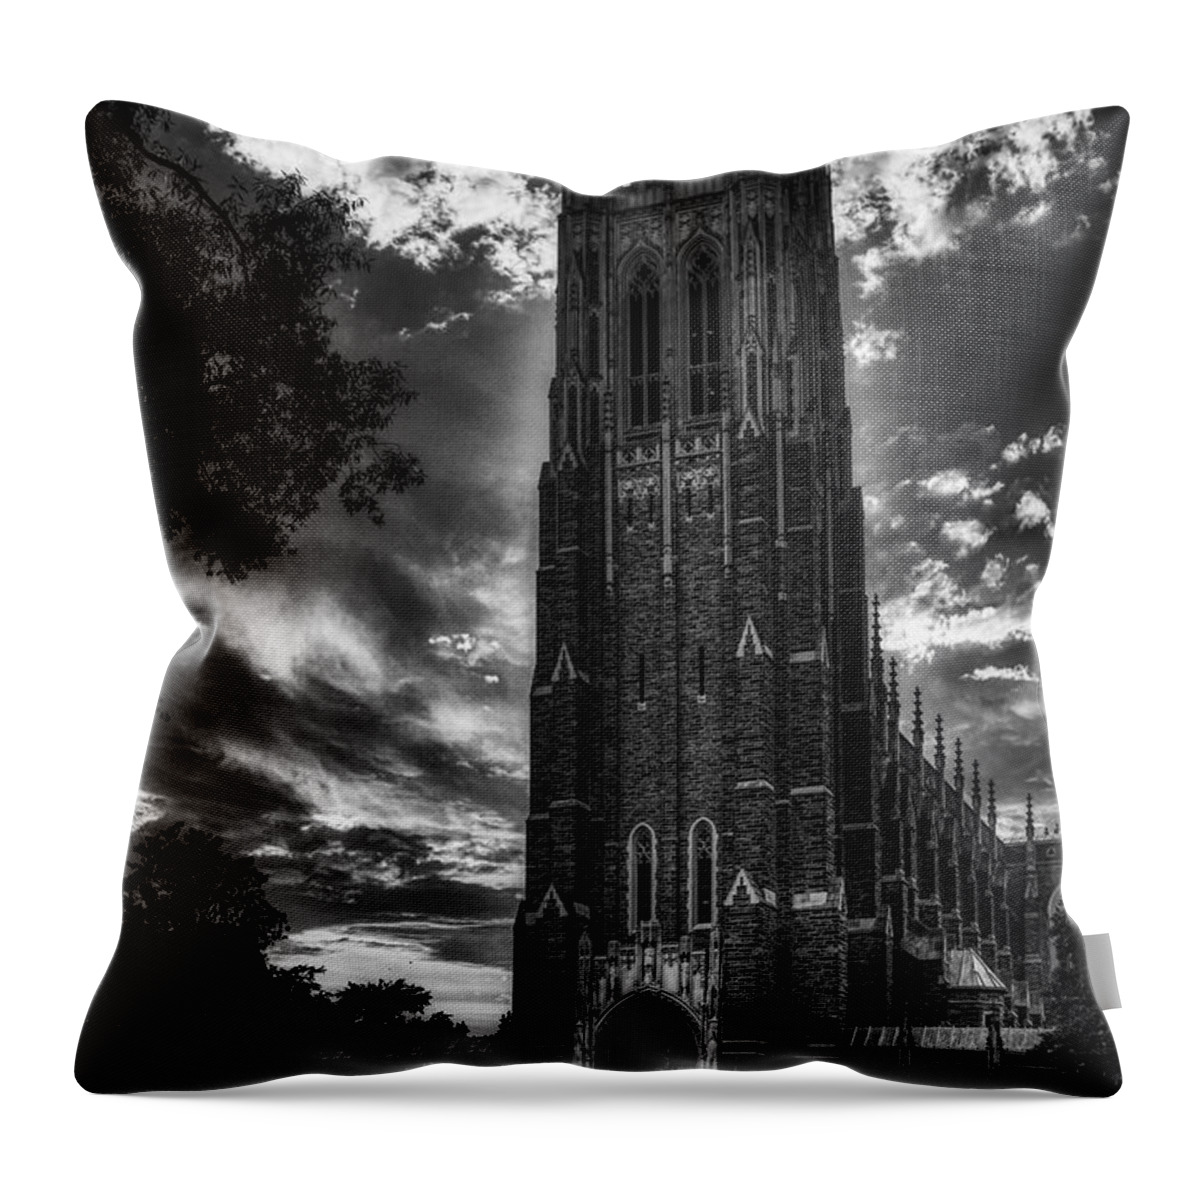 Duke University Throw Pillow featuring the photograph Duke University Chapel At Sunset #2 by Mountain Dreams